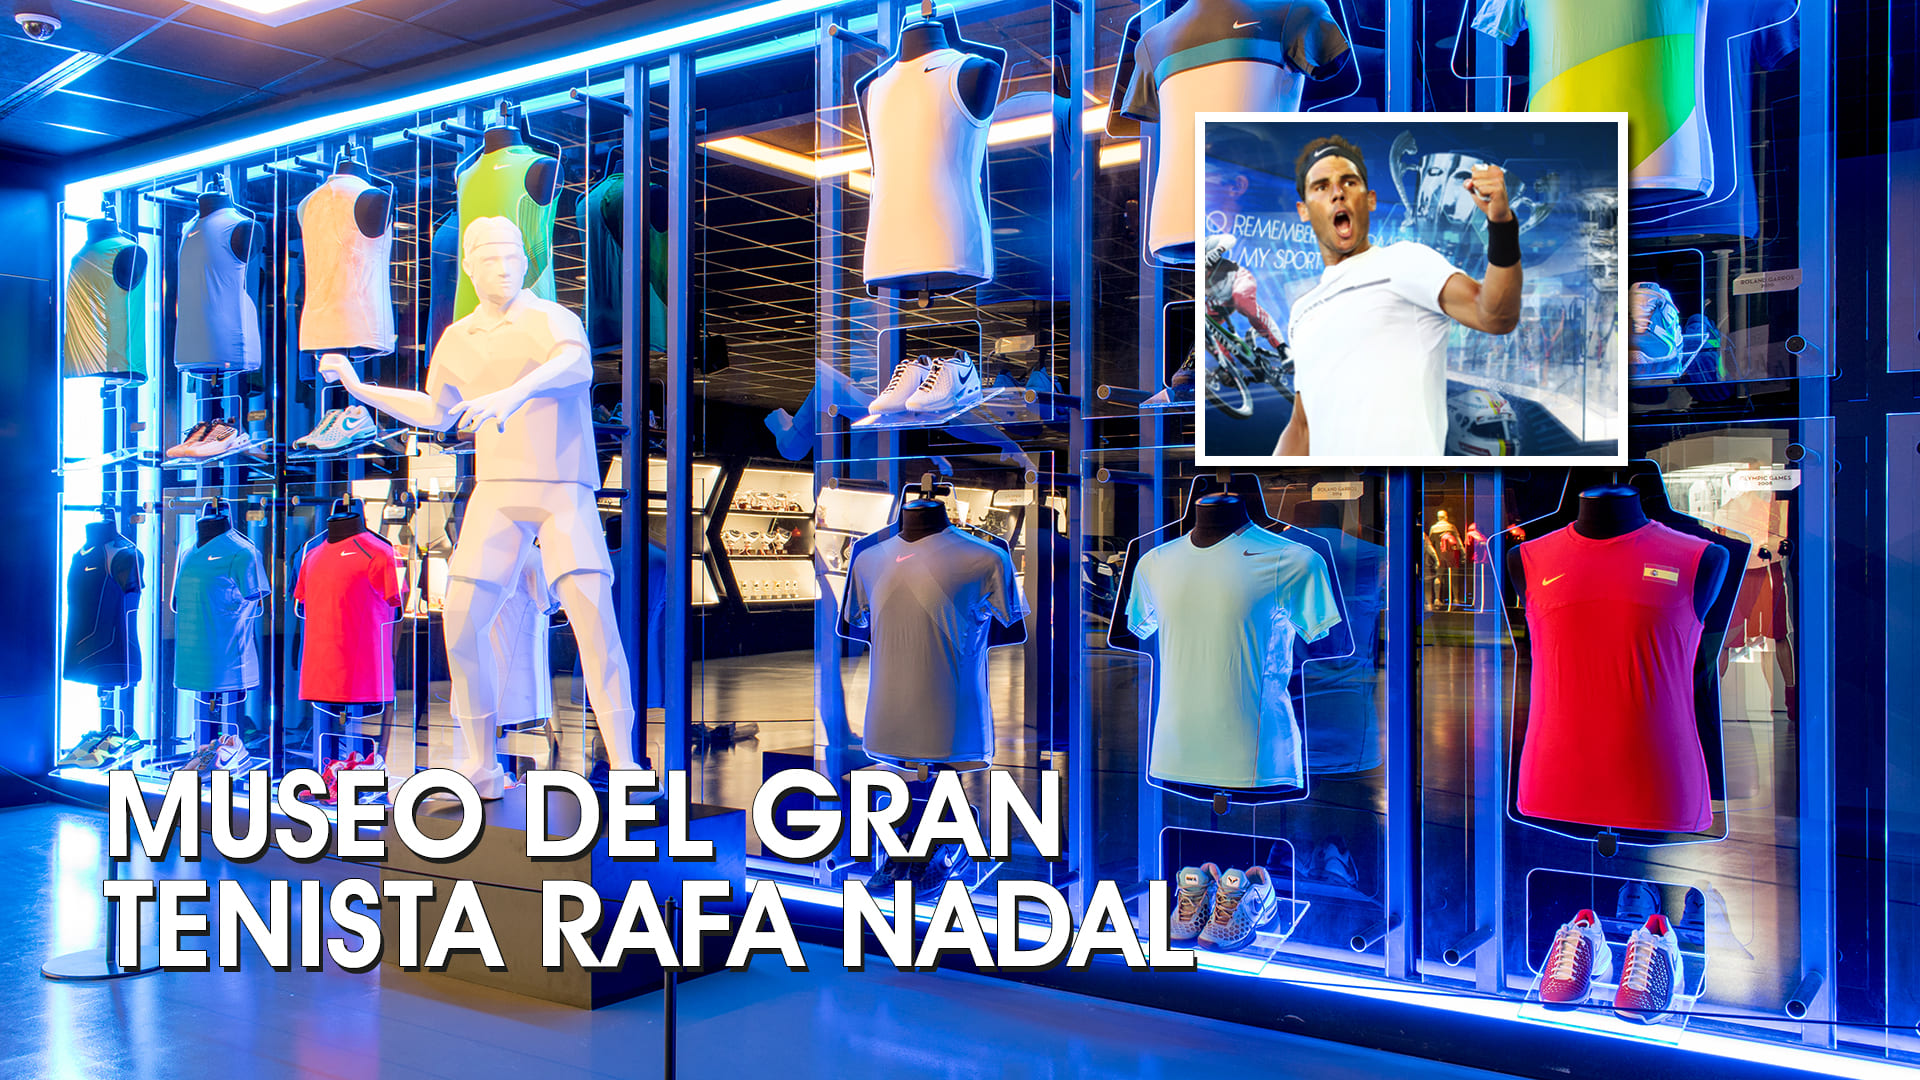 Museo del gran tenista Rafa Nadal